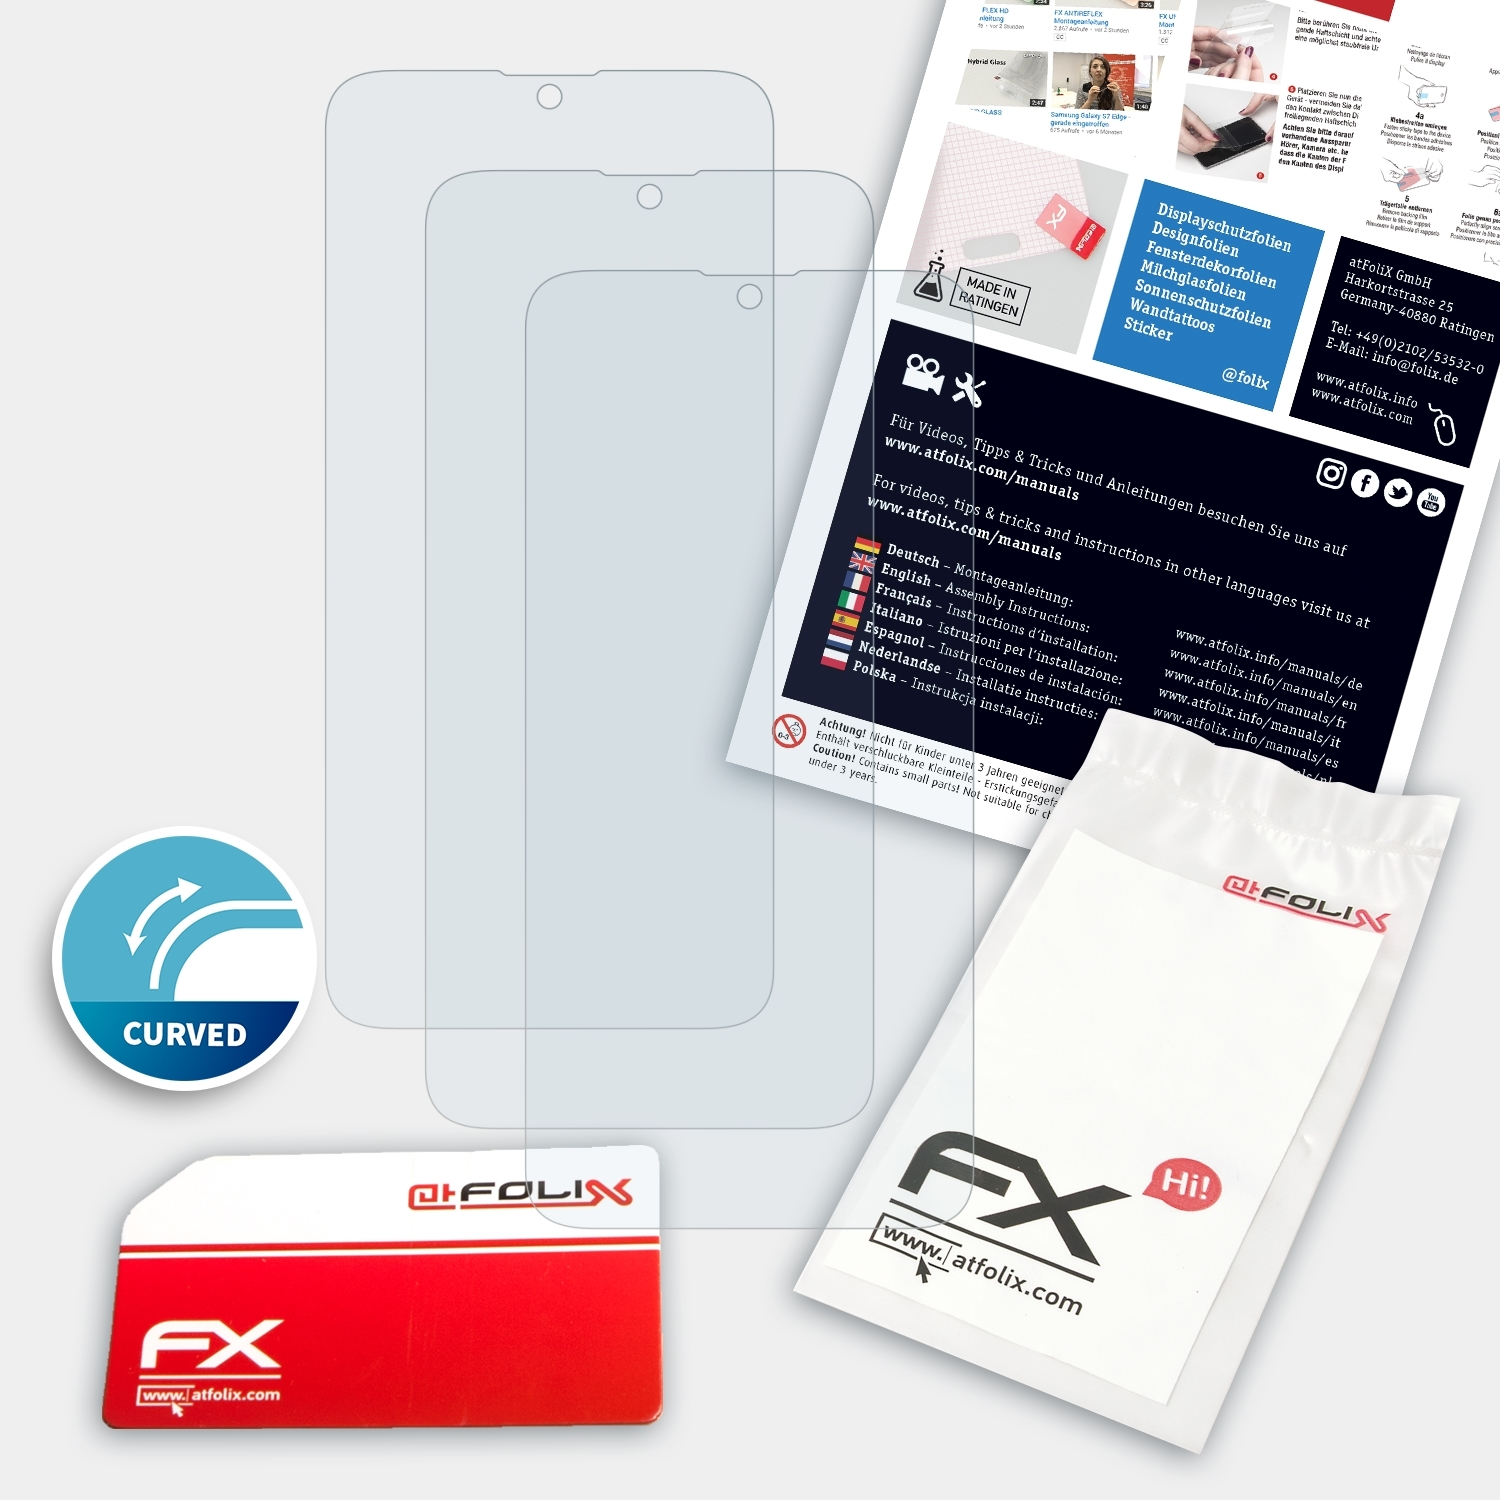 Displayschutz(für FX-ActiFleX ATFOLIX 2.3) 3x Nokia